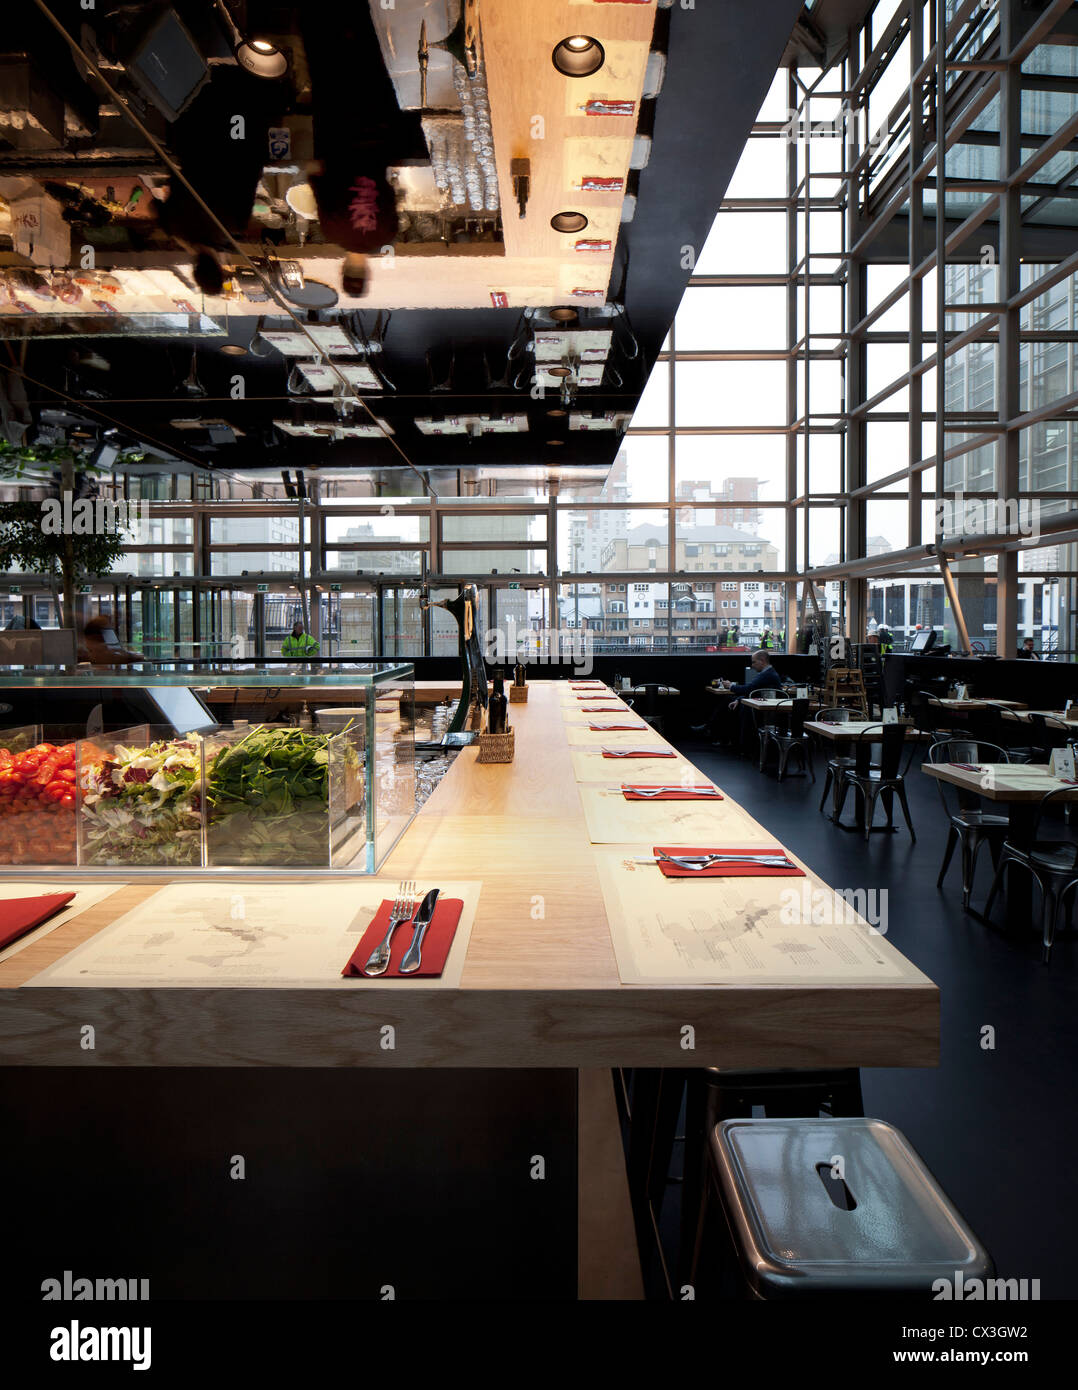 Obika Canary Wharf, London, United Kingdom. Architect: Labics, 2012. Bar area. Stock Photo